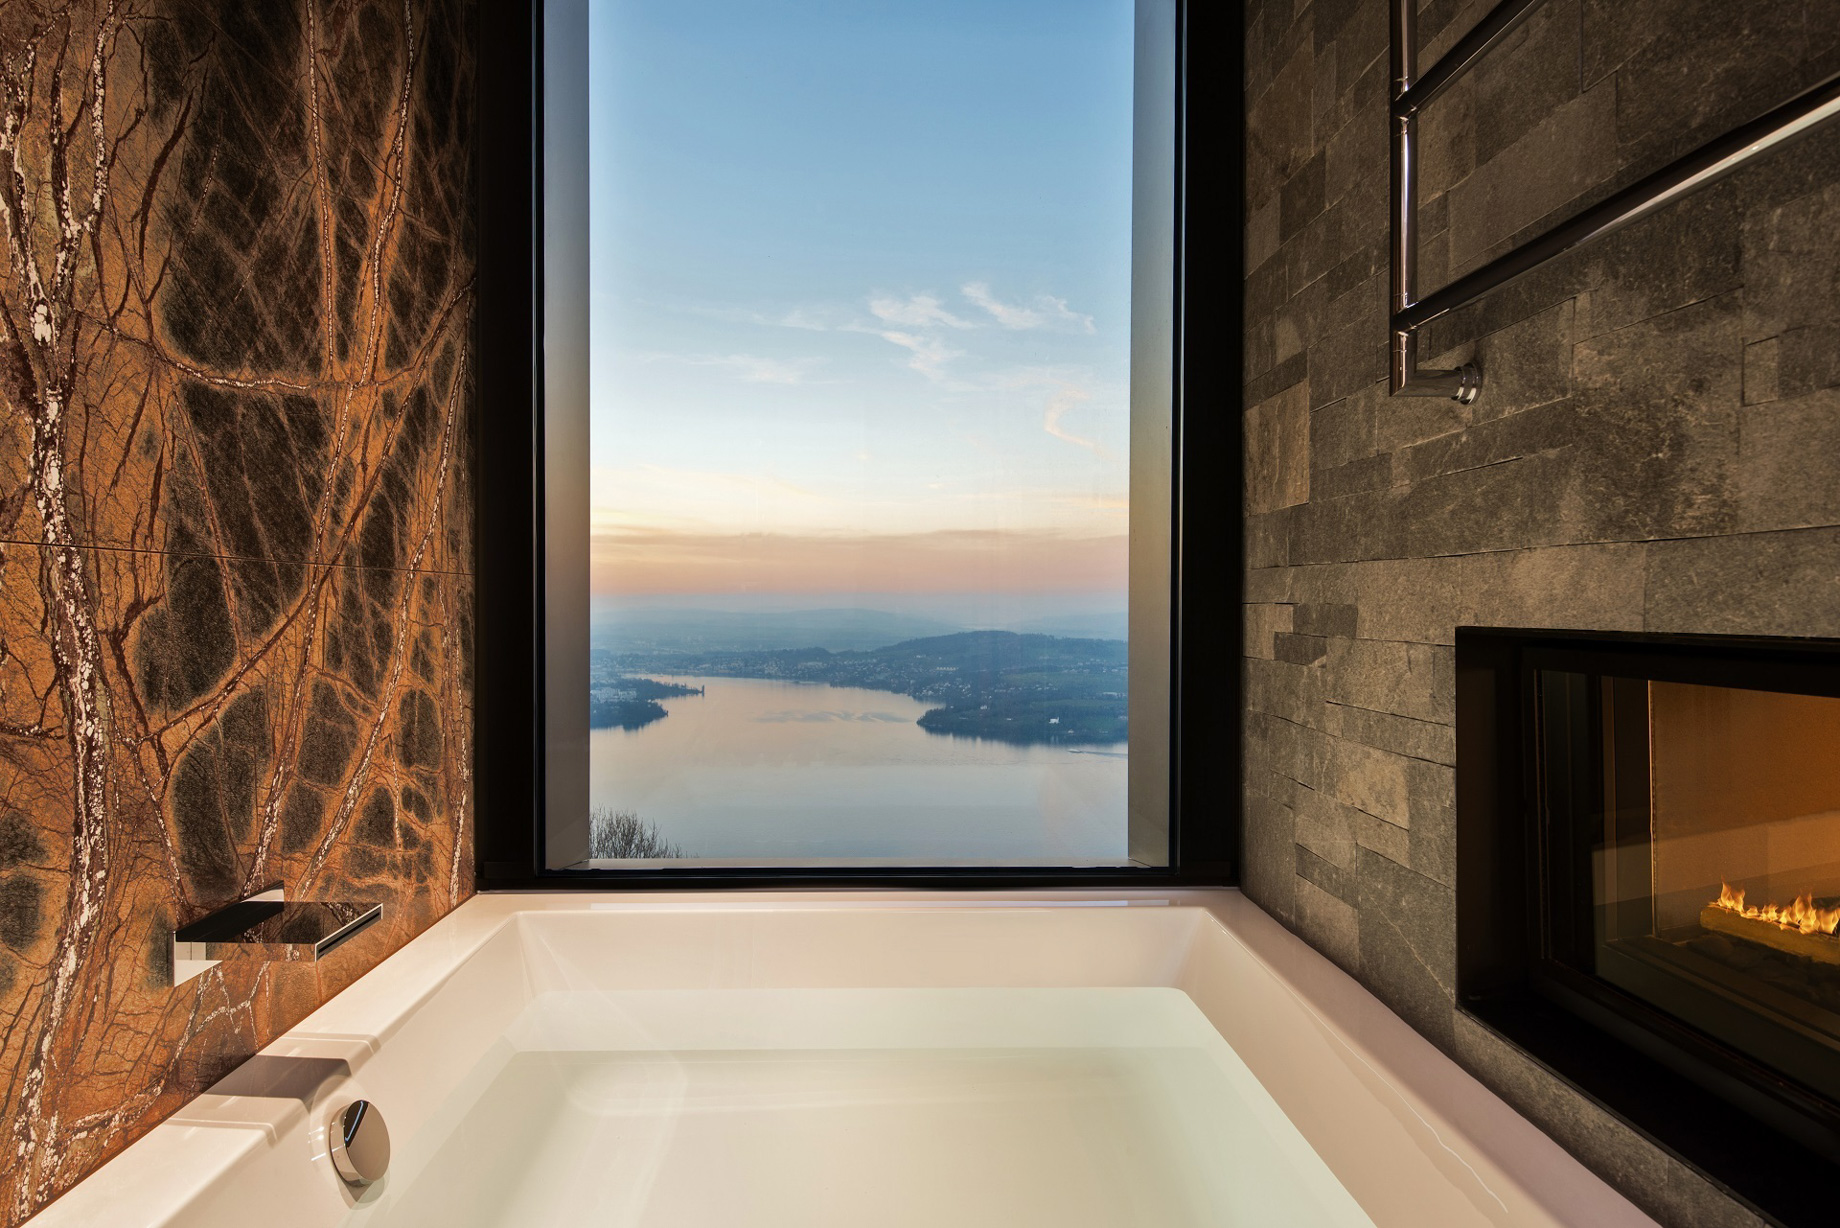 Burgenstock Hotel & Alpine Spa – Obburgen, Switzerland – Spa Suite Bathroom Tub View